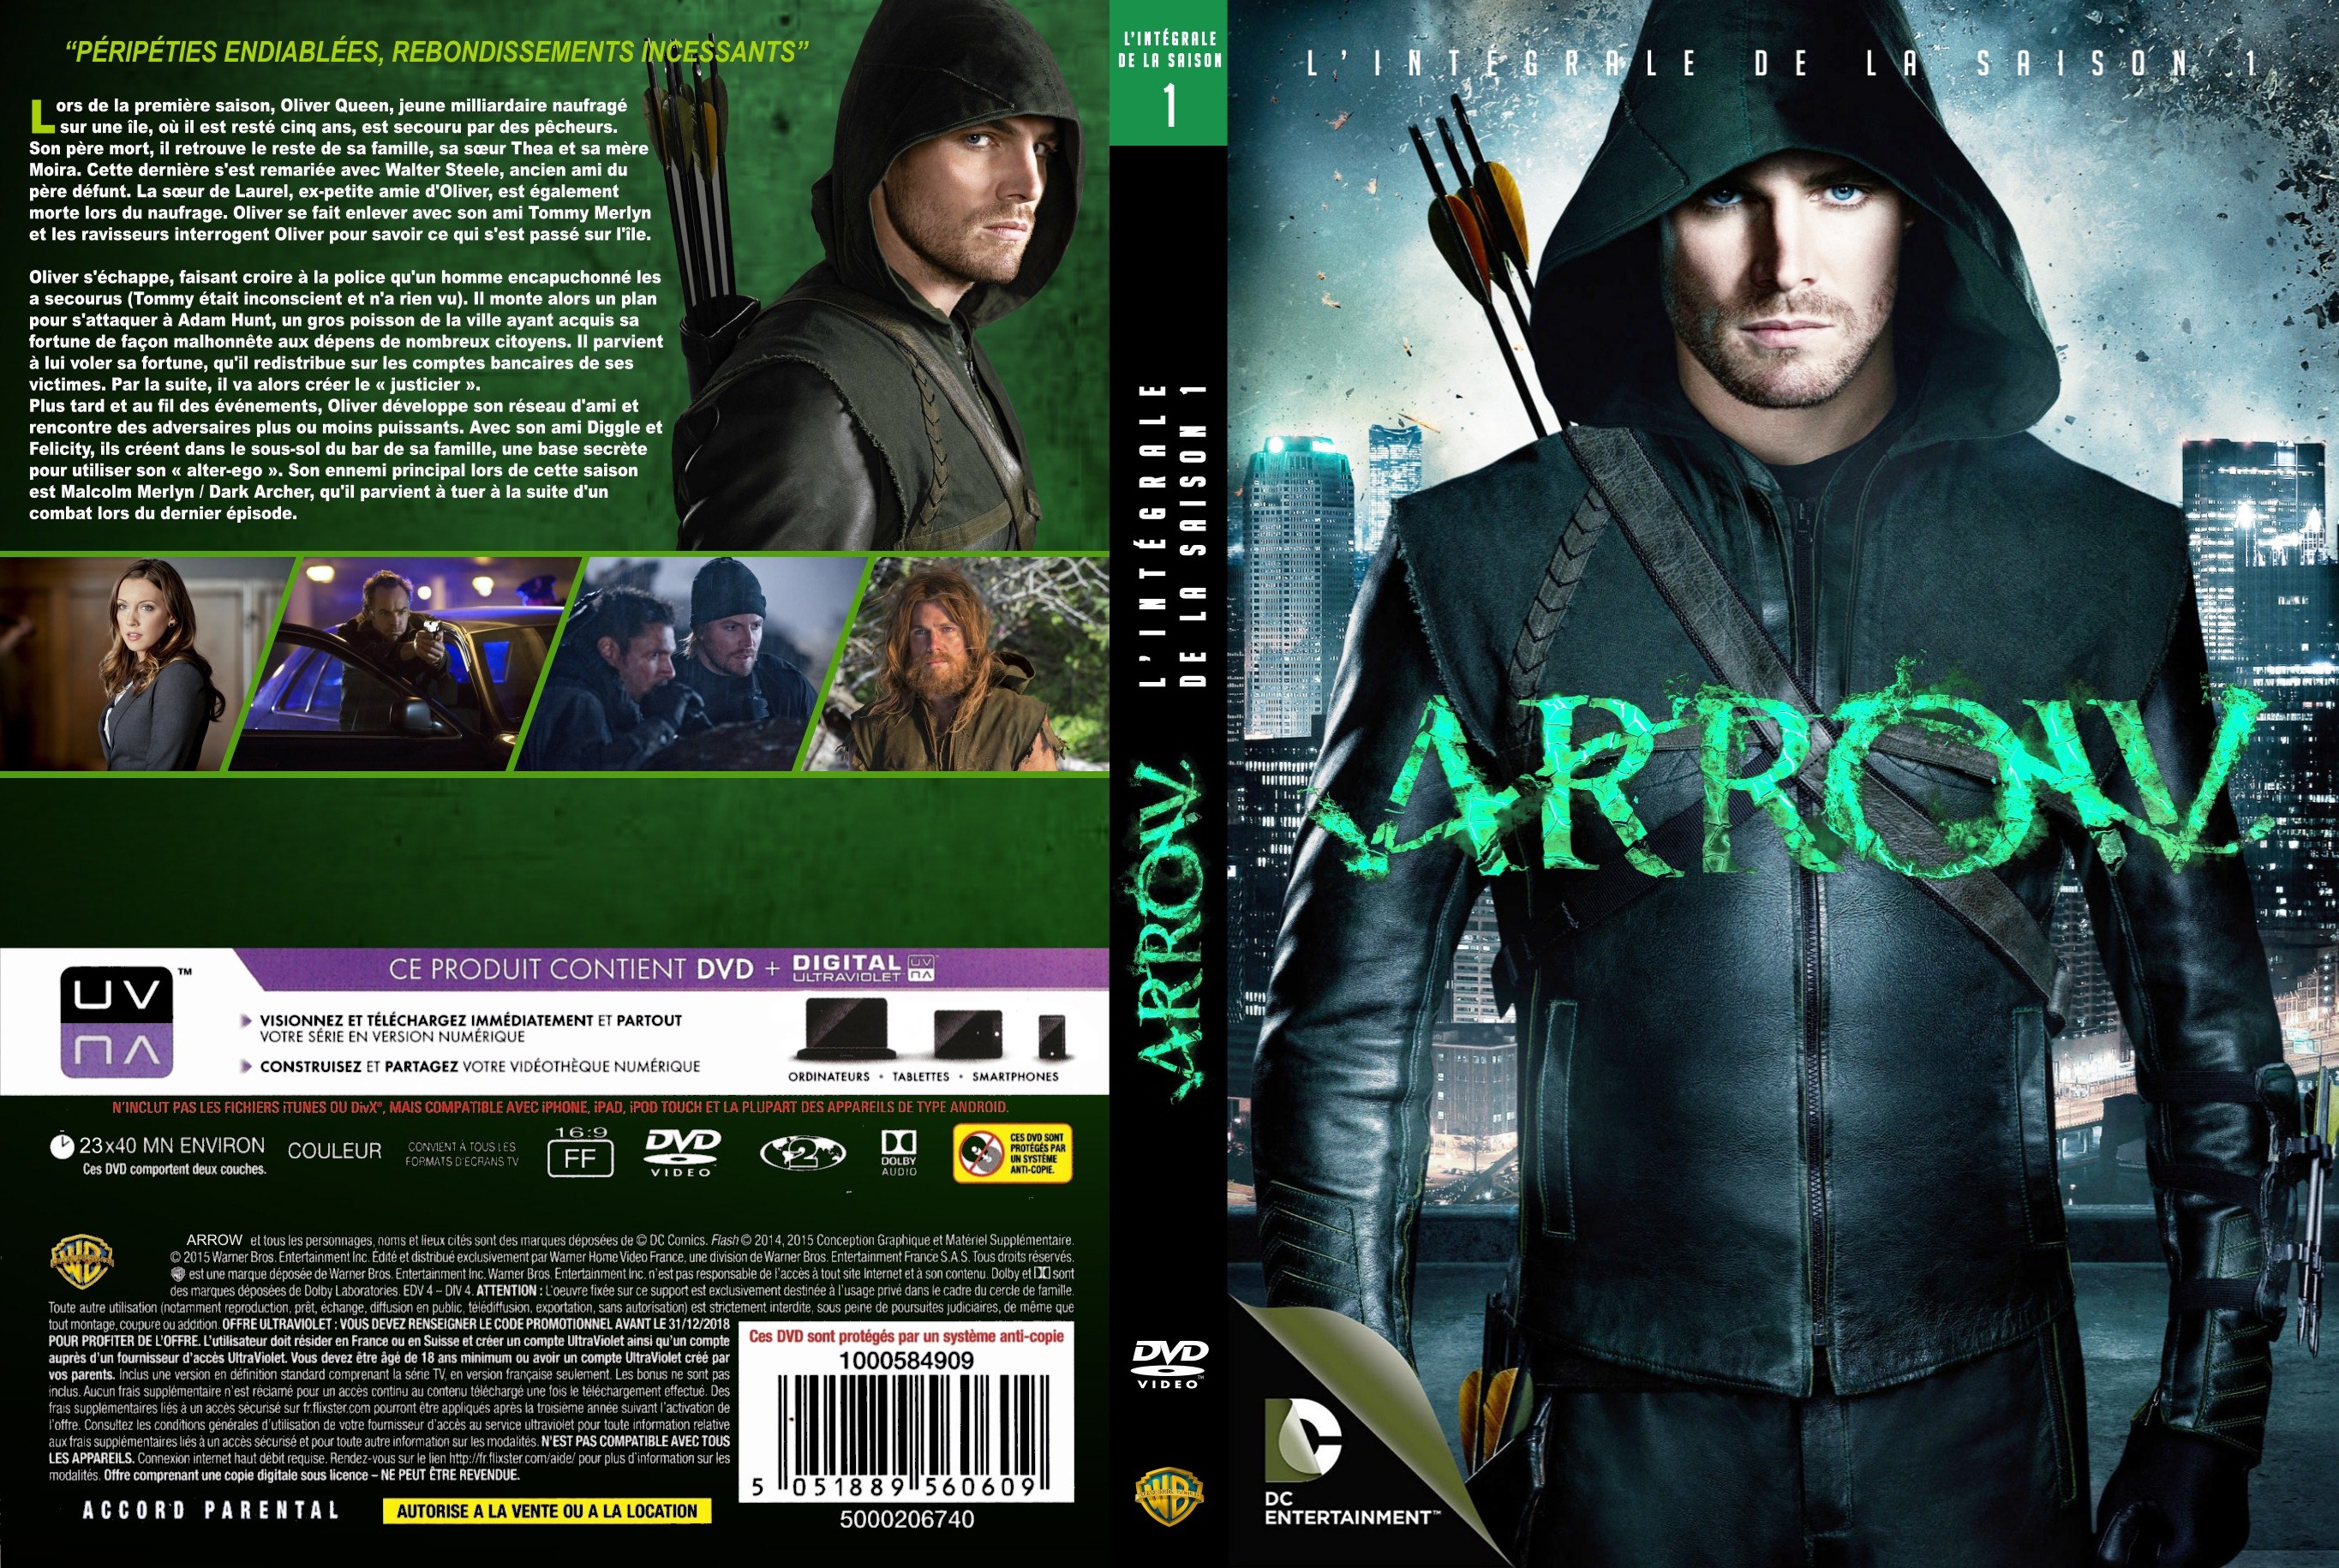 Jaquette DVD Arrow saison 1 v2